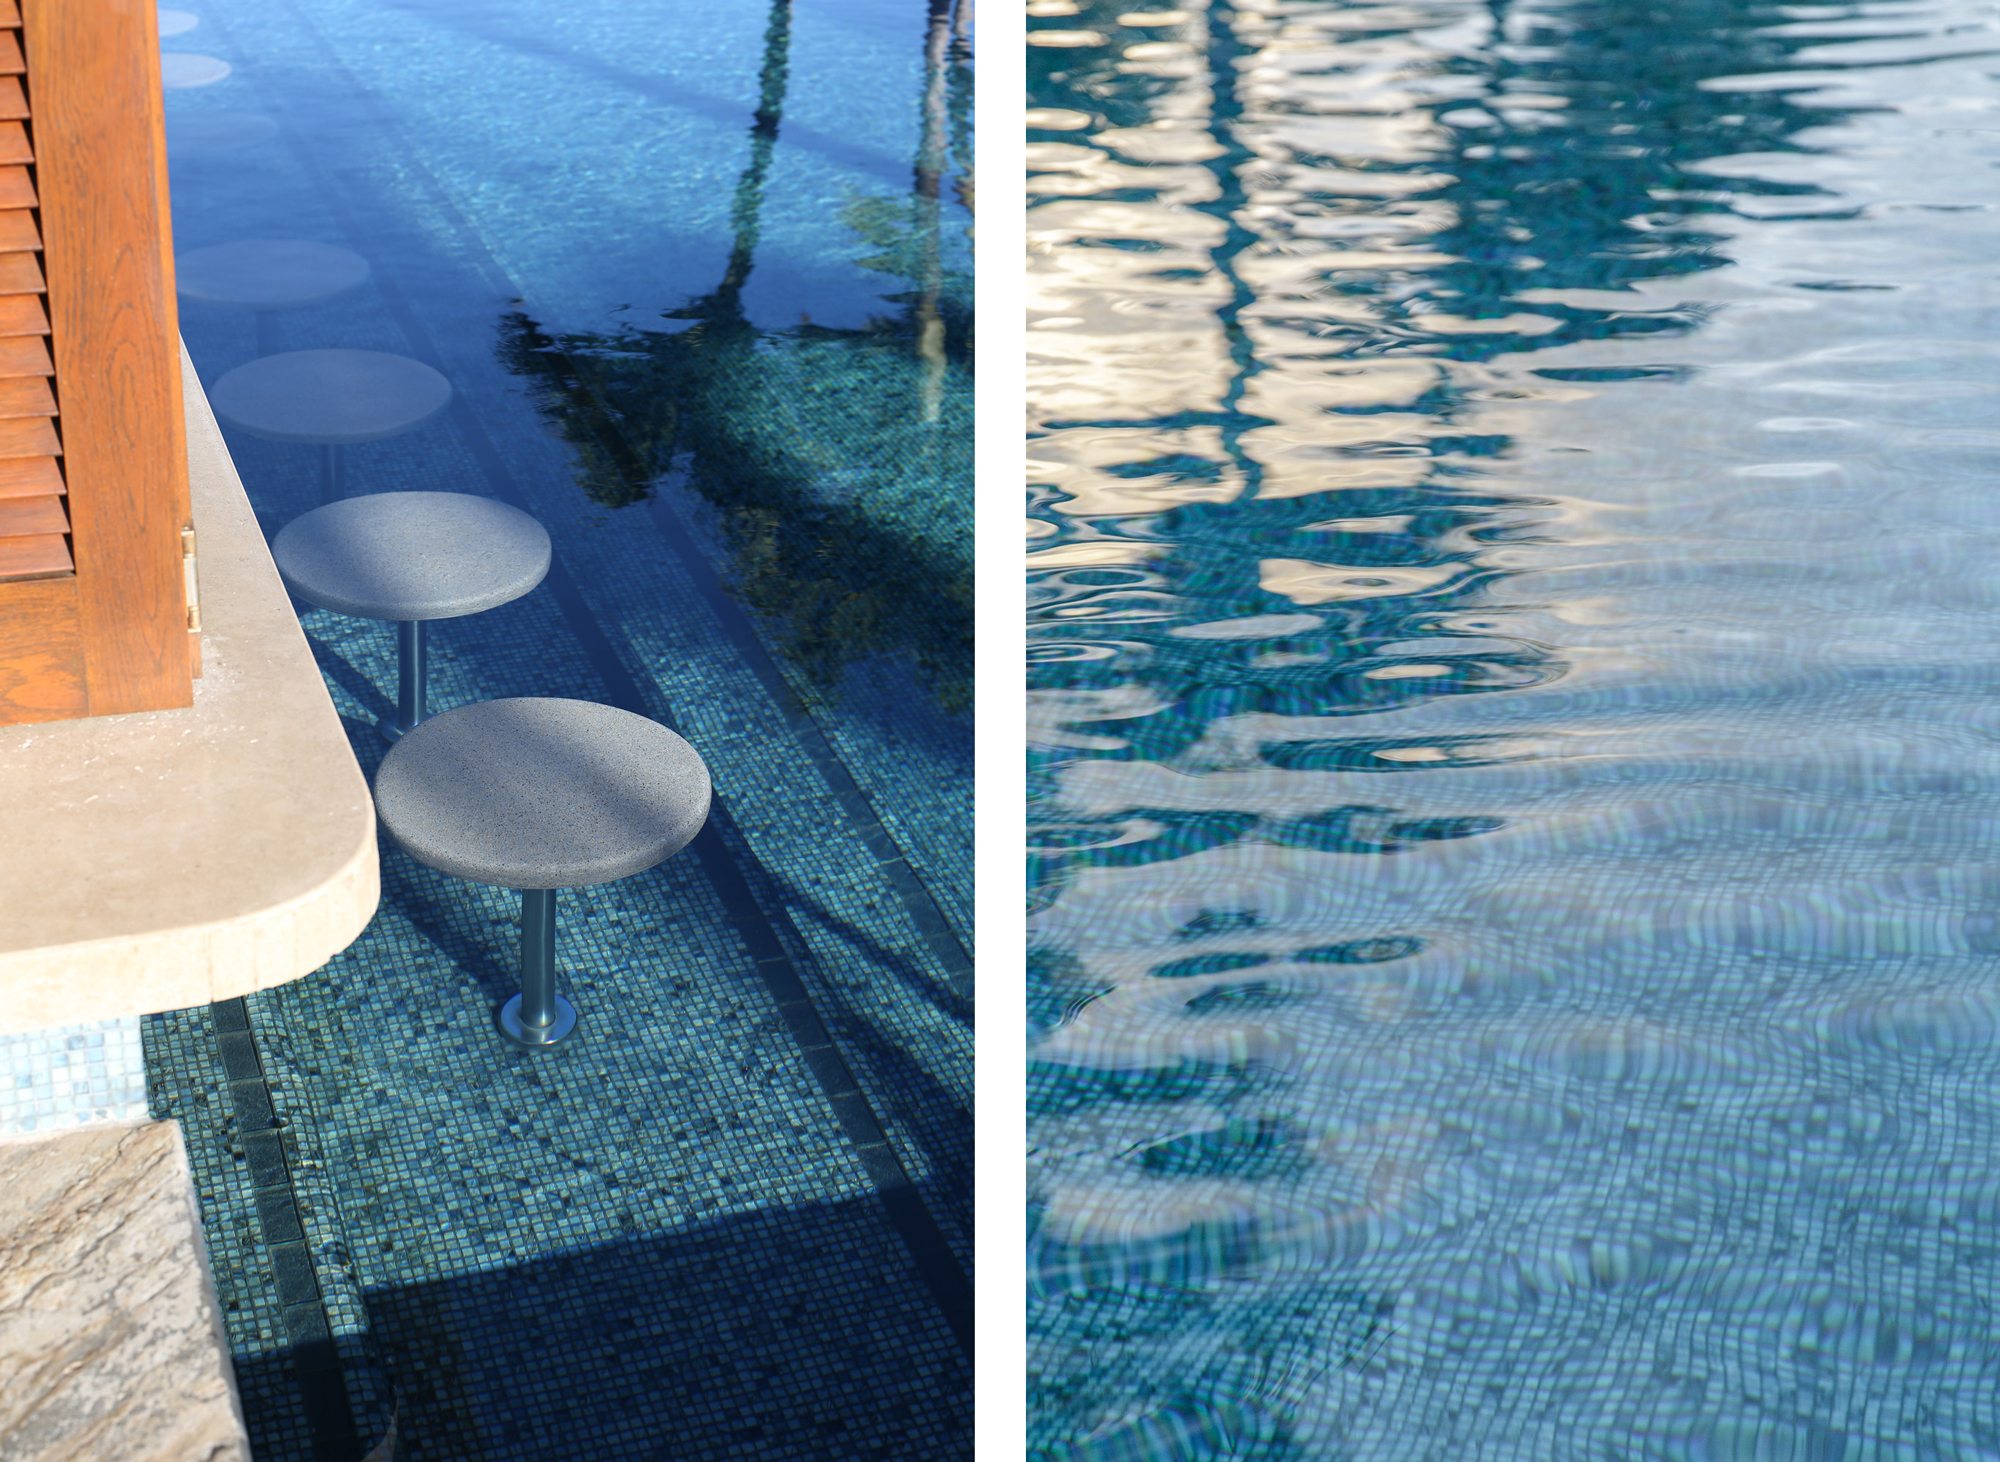 Maui beach bar stools, pool surface comparison